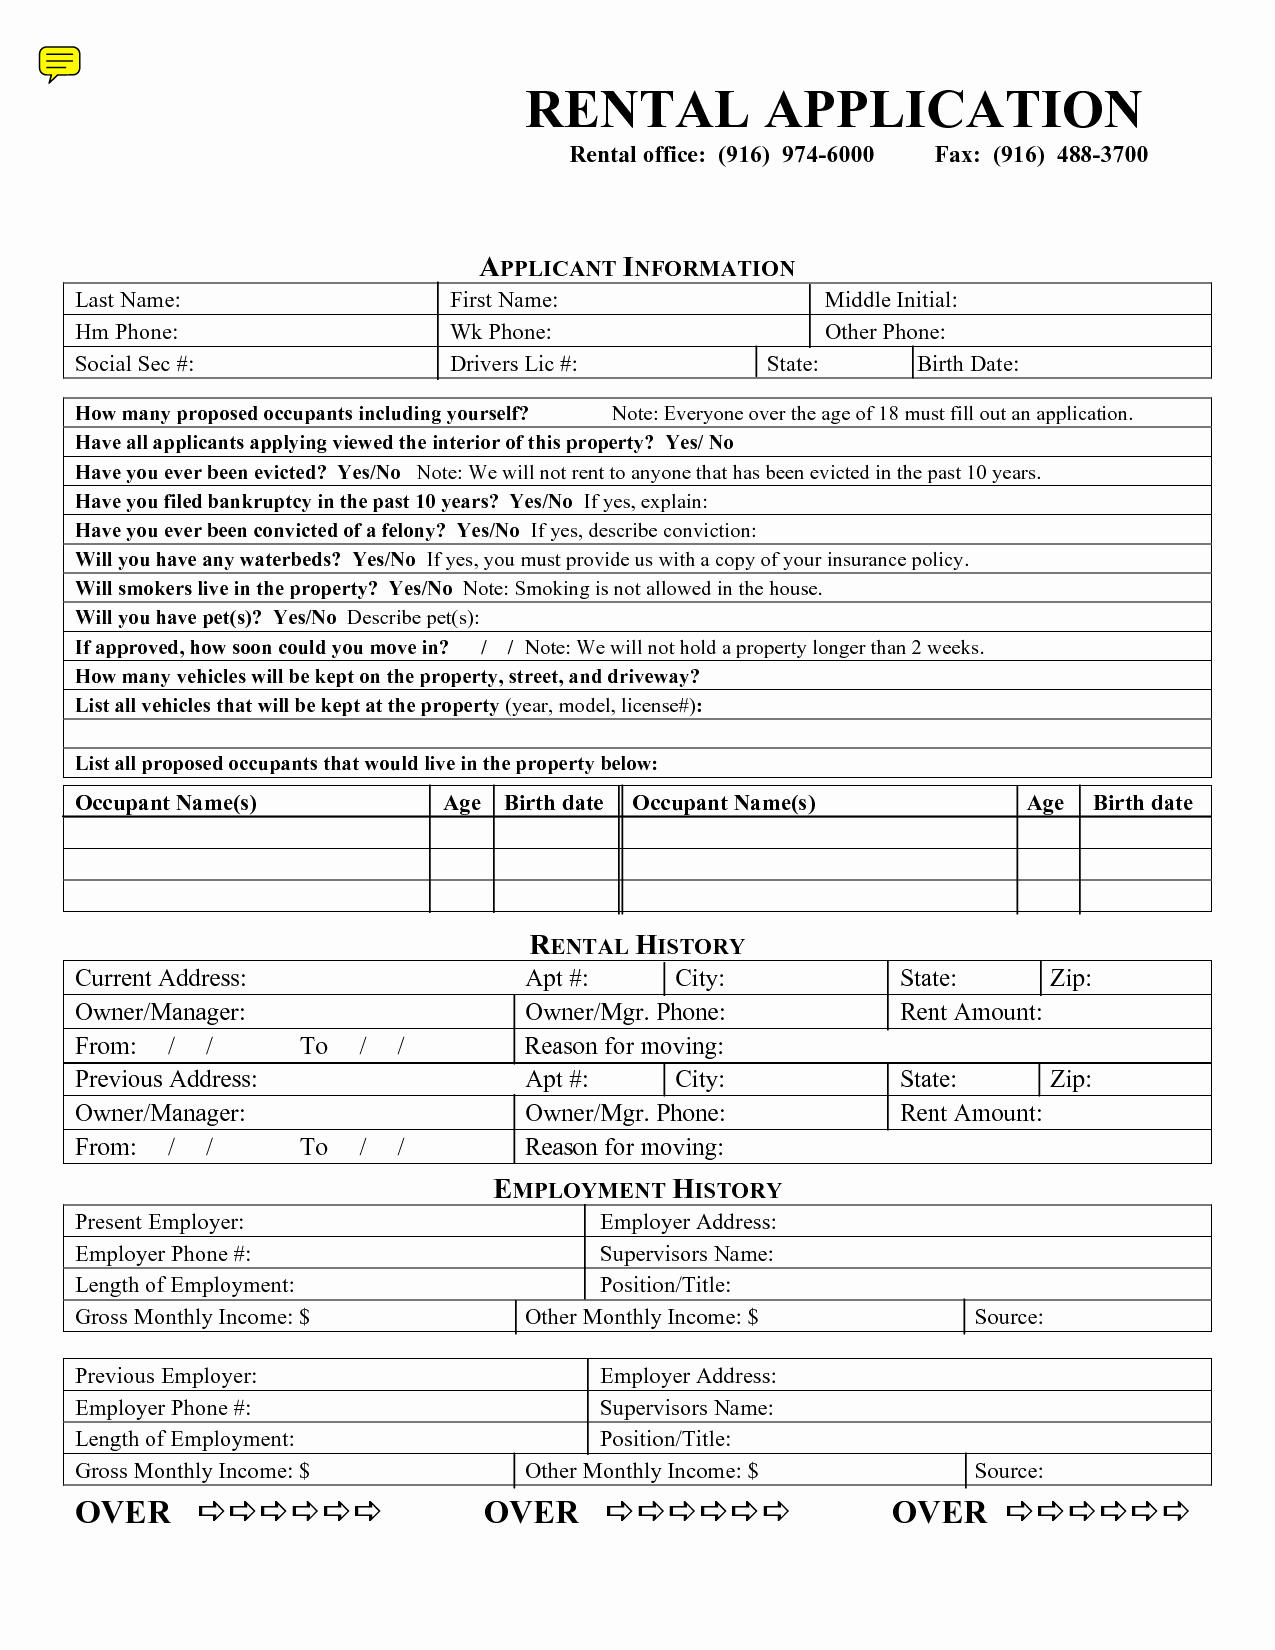 Rental Application form Nc Fresh Free Rental Application form by Mary Jmenintigar House